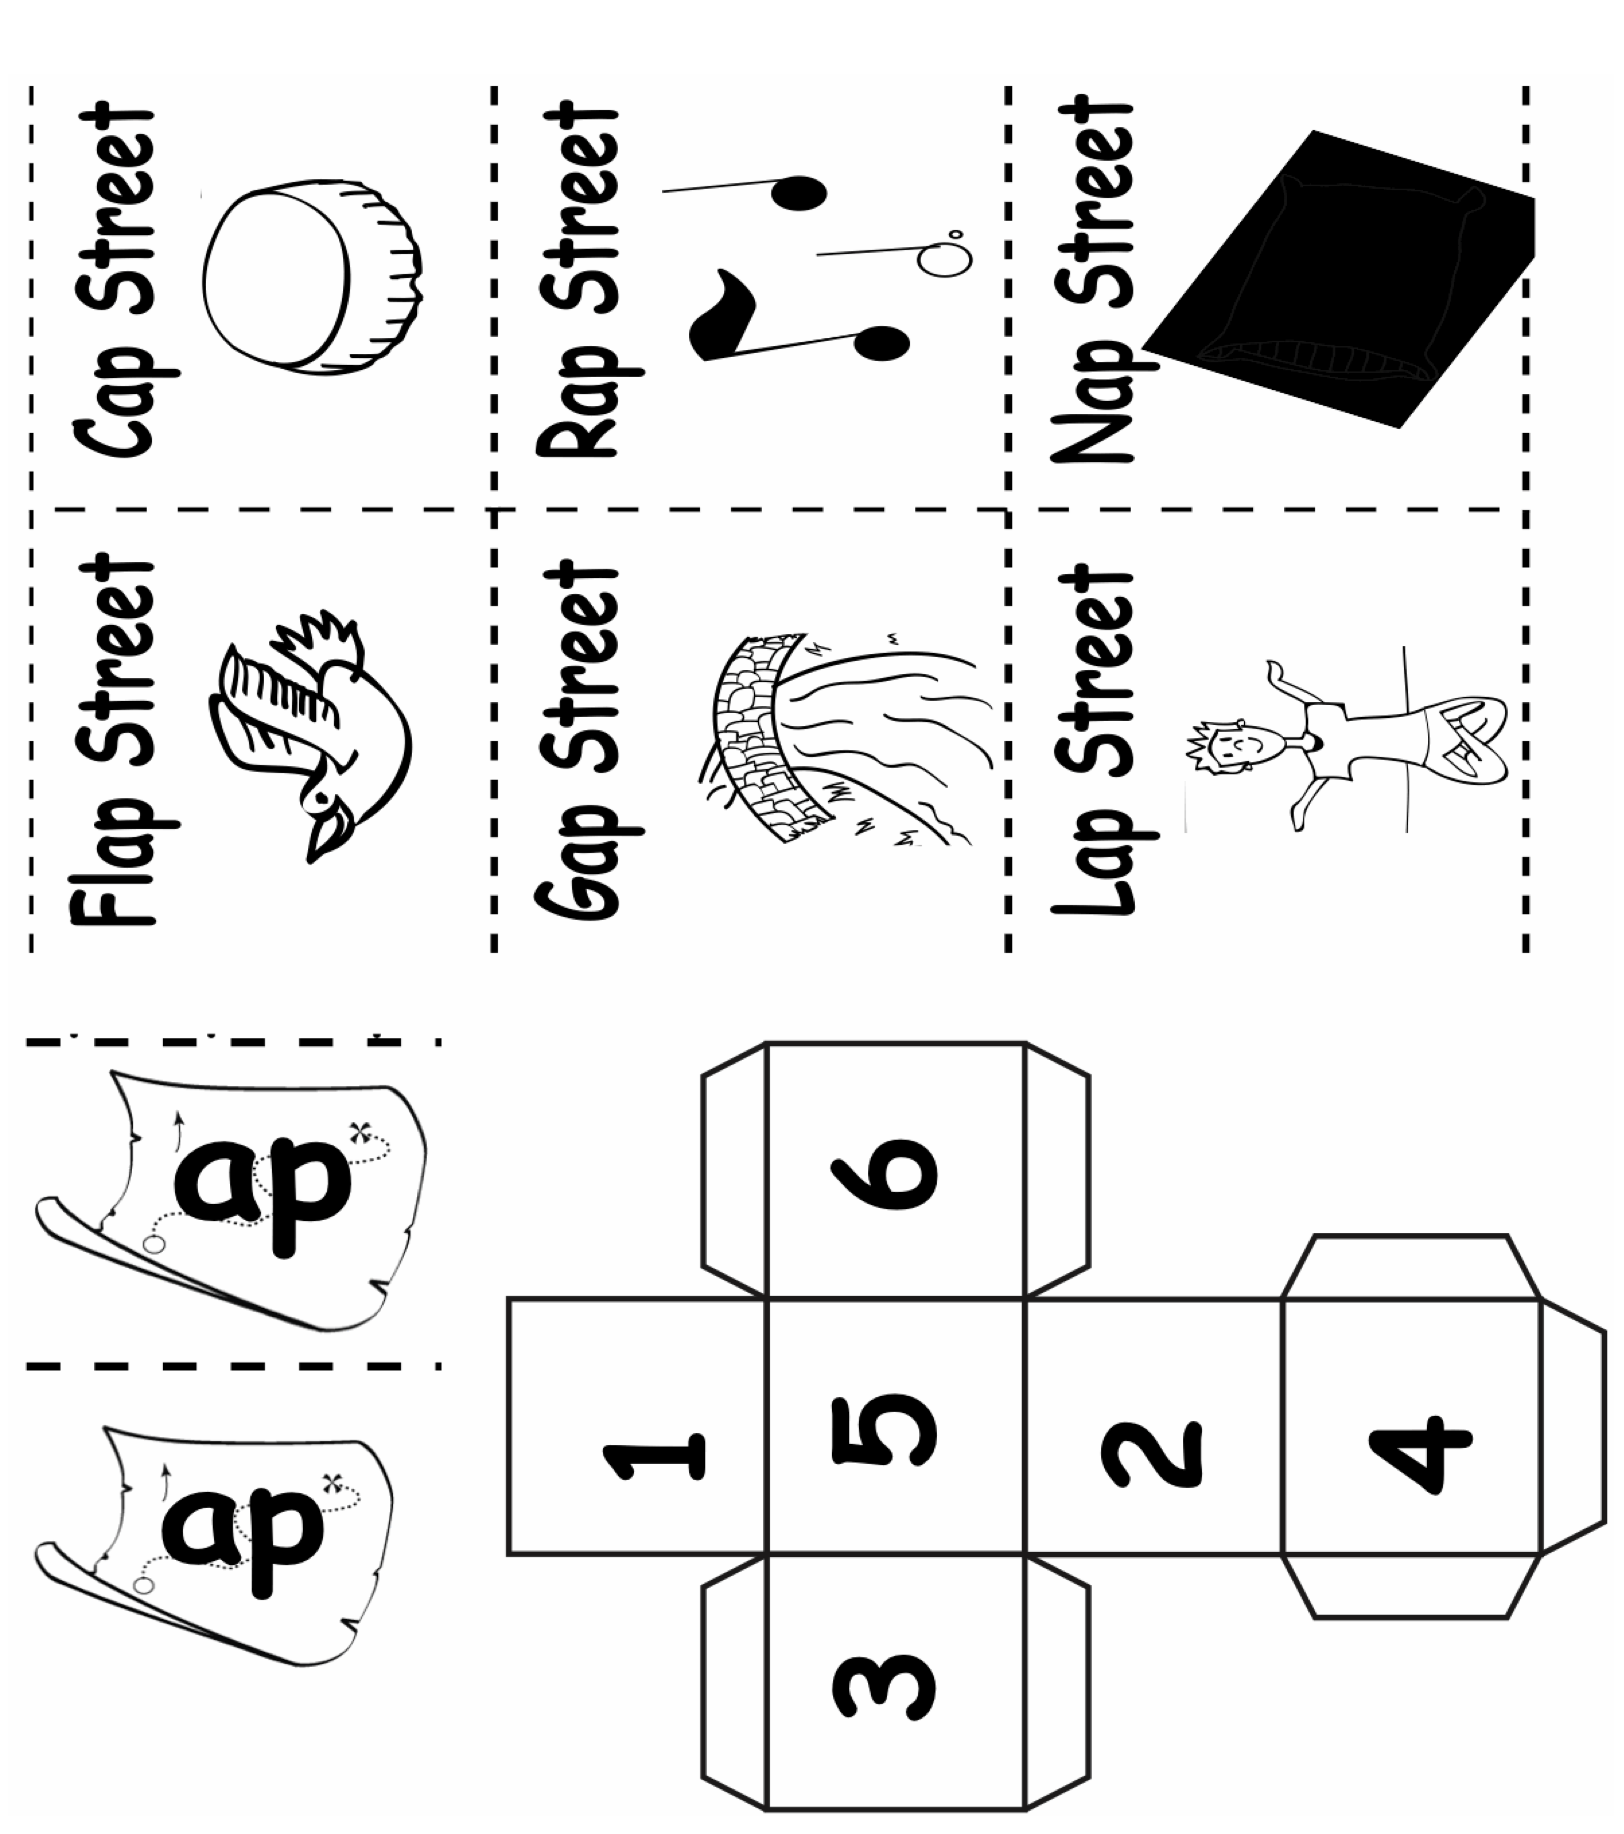 Ap-Map-game-pieces